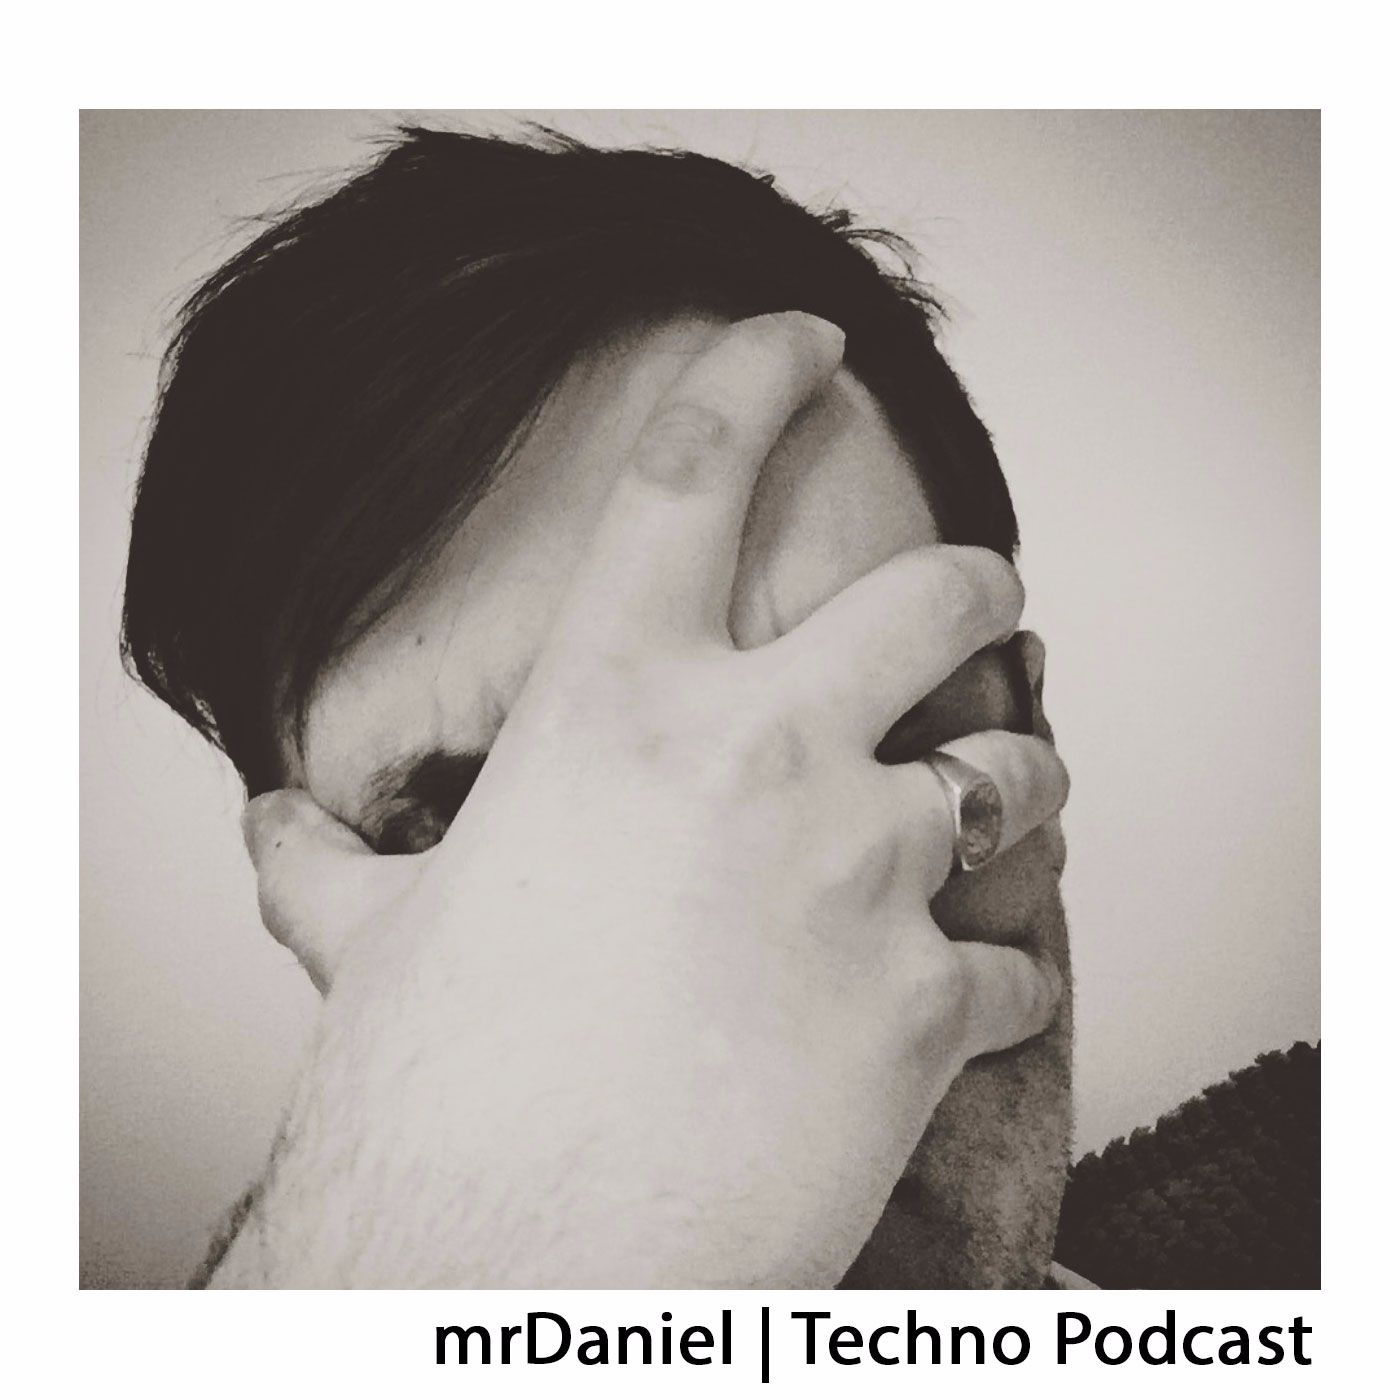 mrDaniel | Weekly Techno Podcast